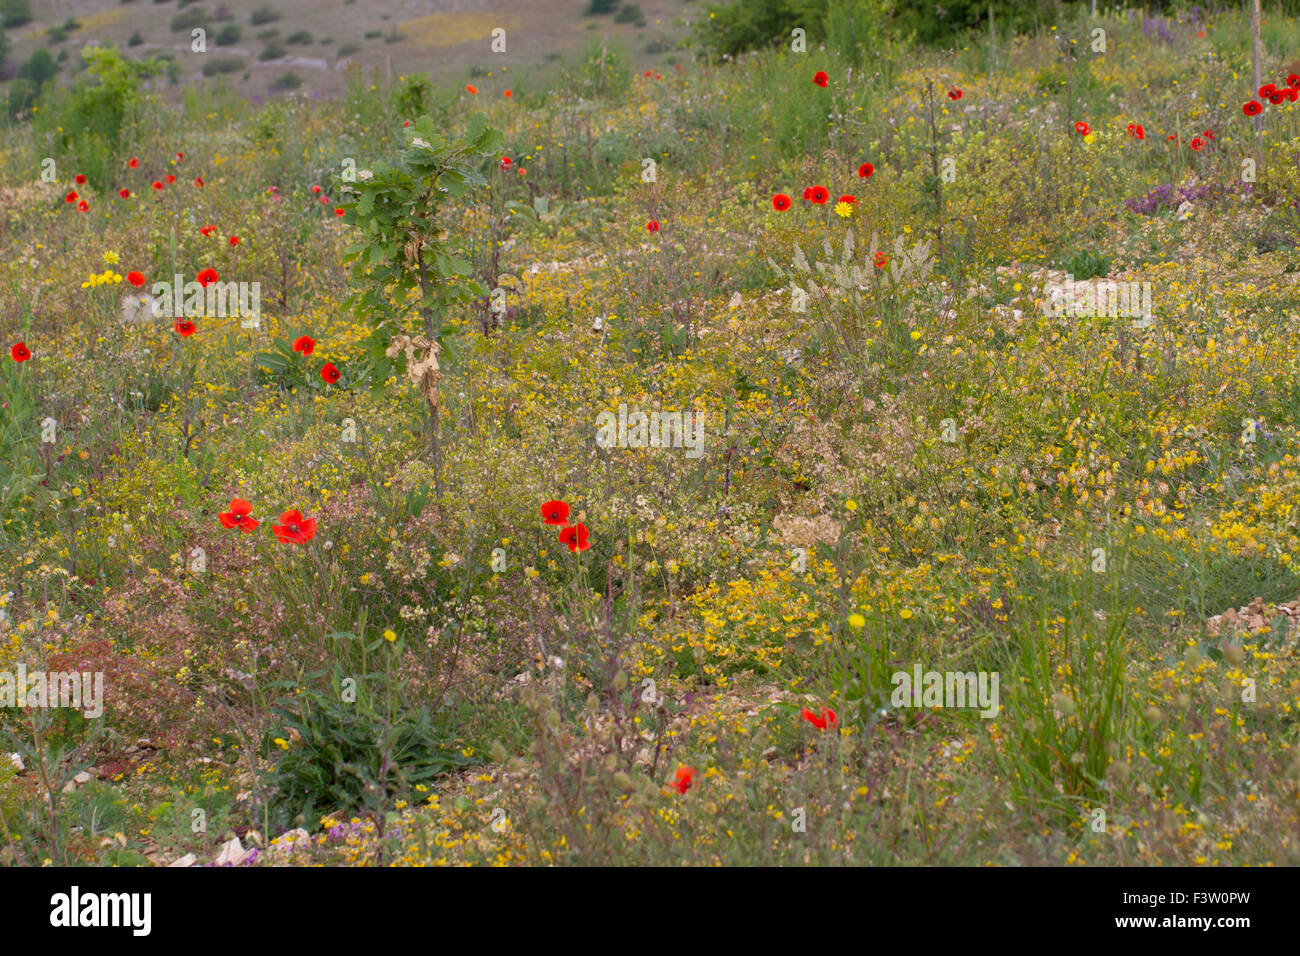 Wild flowers including Corn Poppy, Buckler Mustard, and Kidney Vetch flowering. Causse de Gramat, Lot region, France. May. Stock Photo